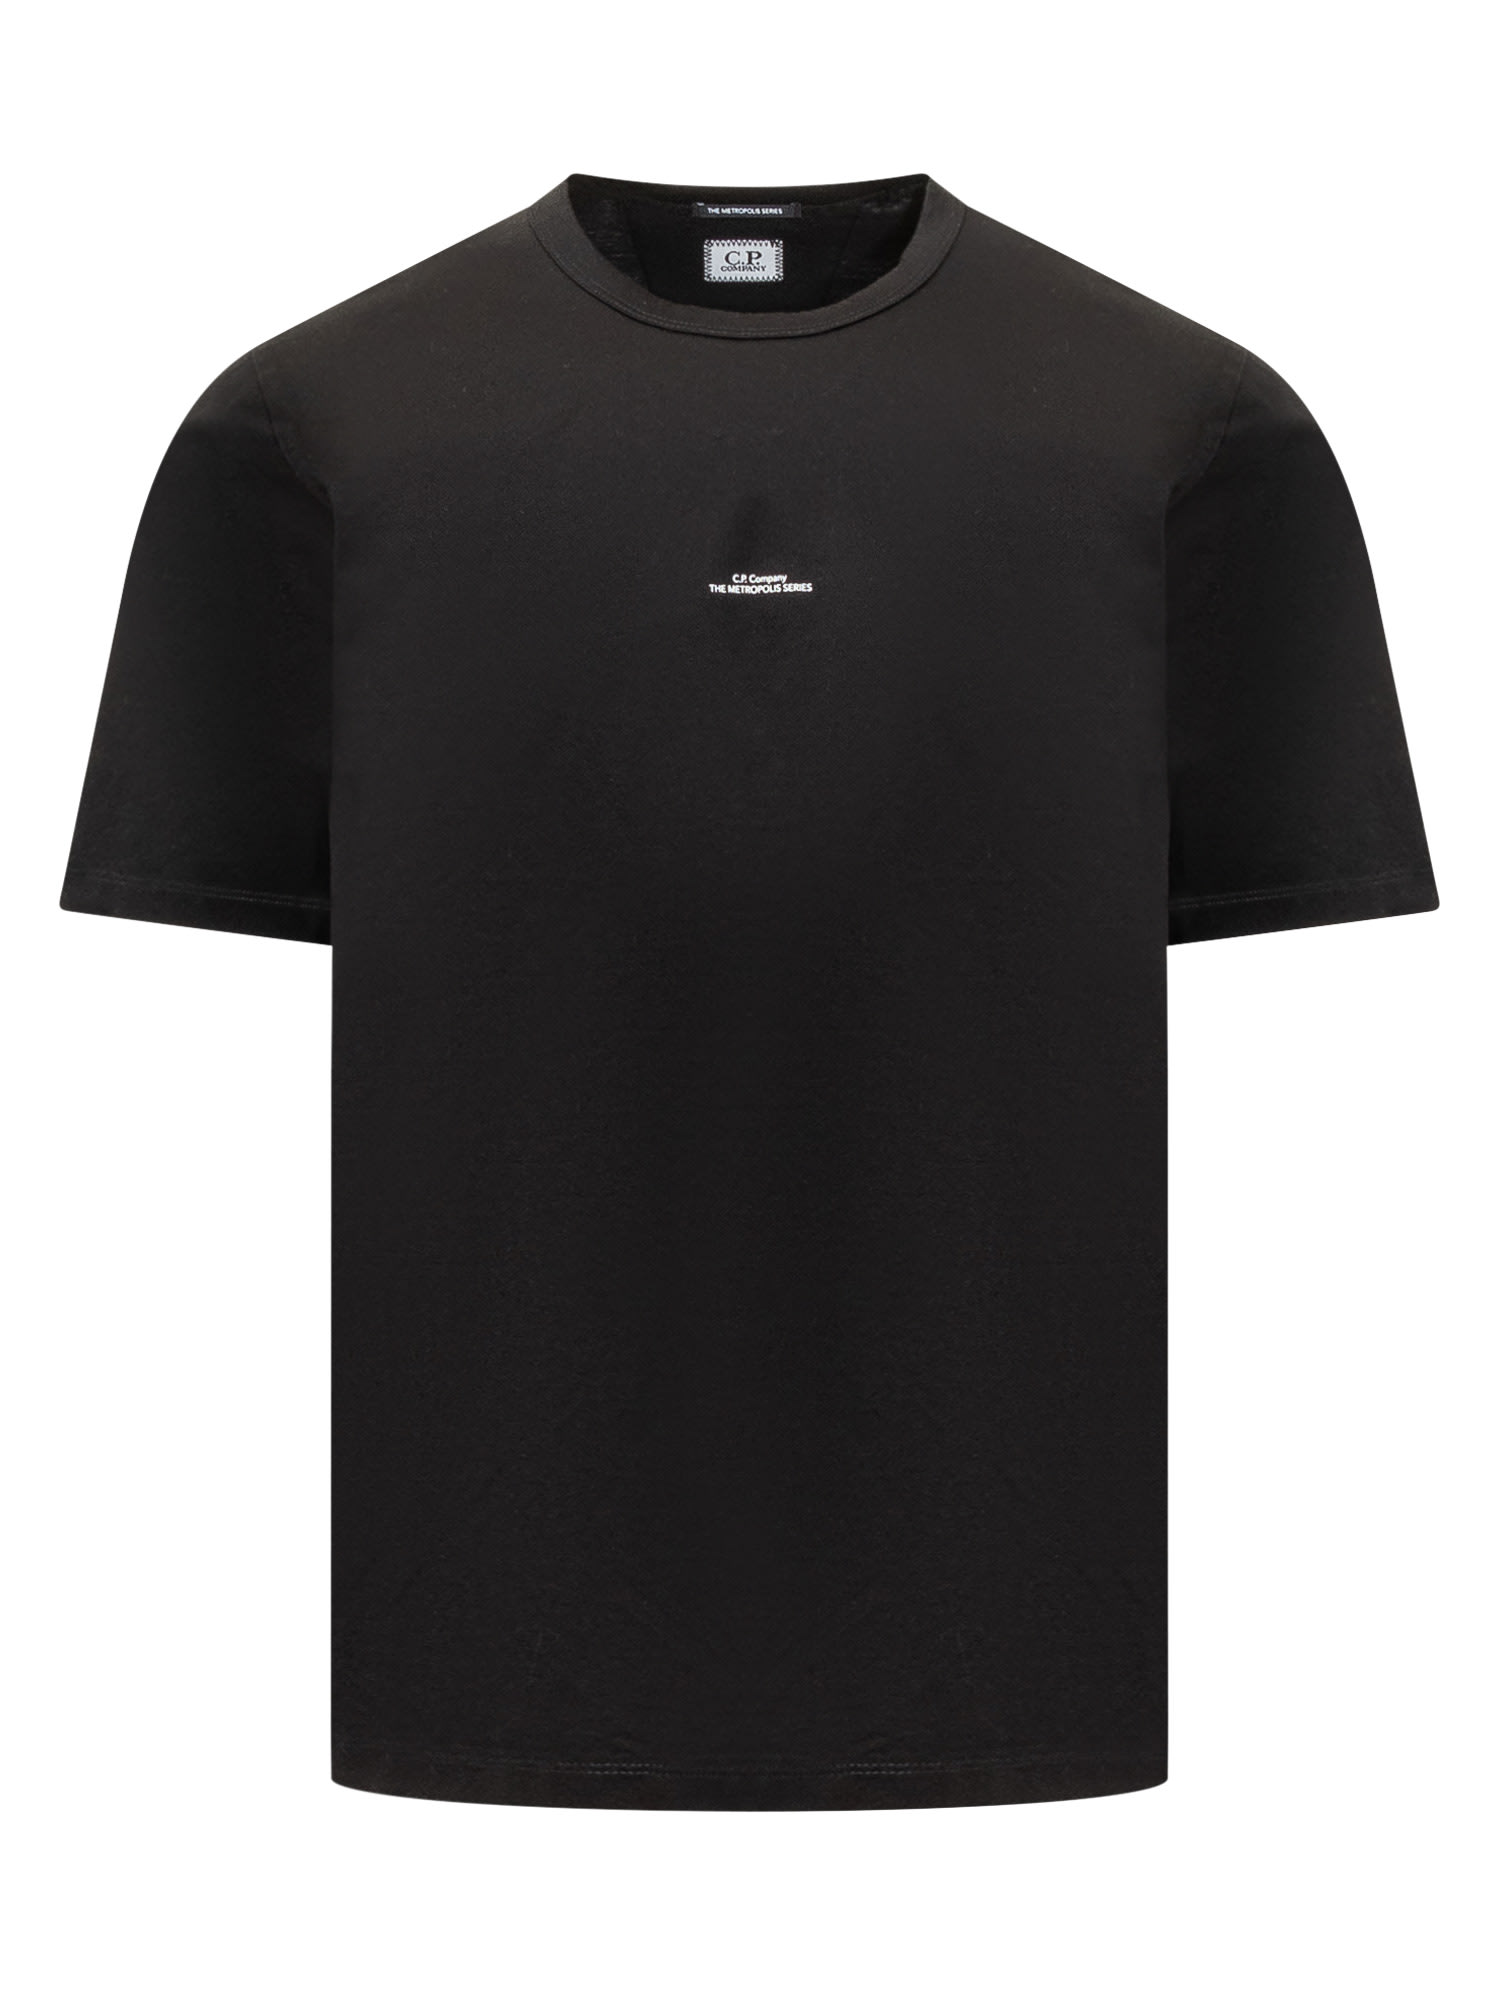 C.p. Company Metropolis T-shirt In Black